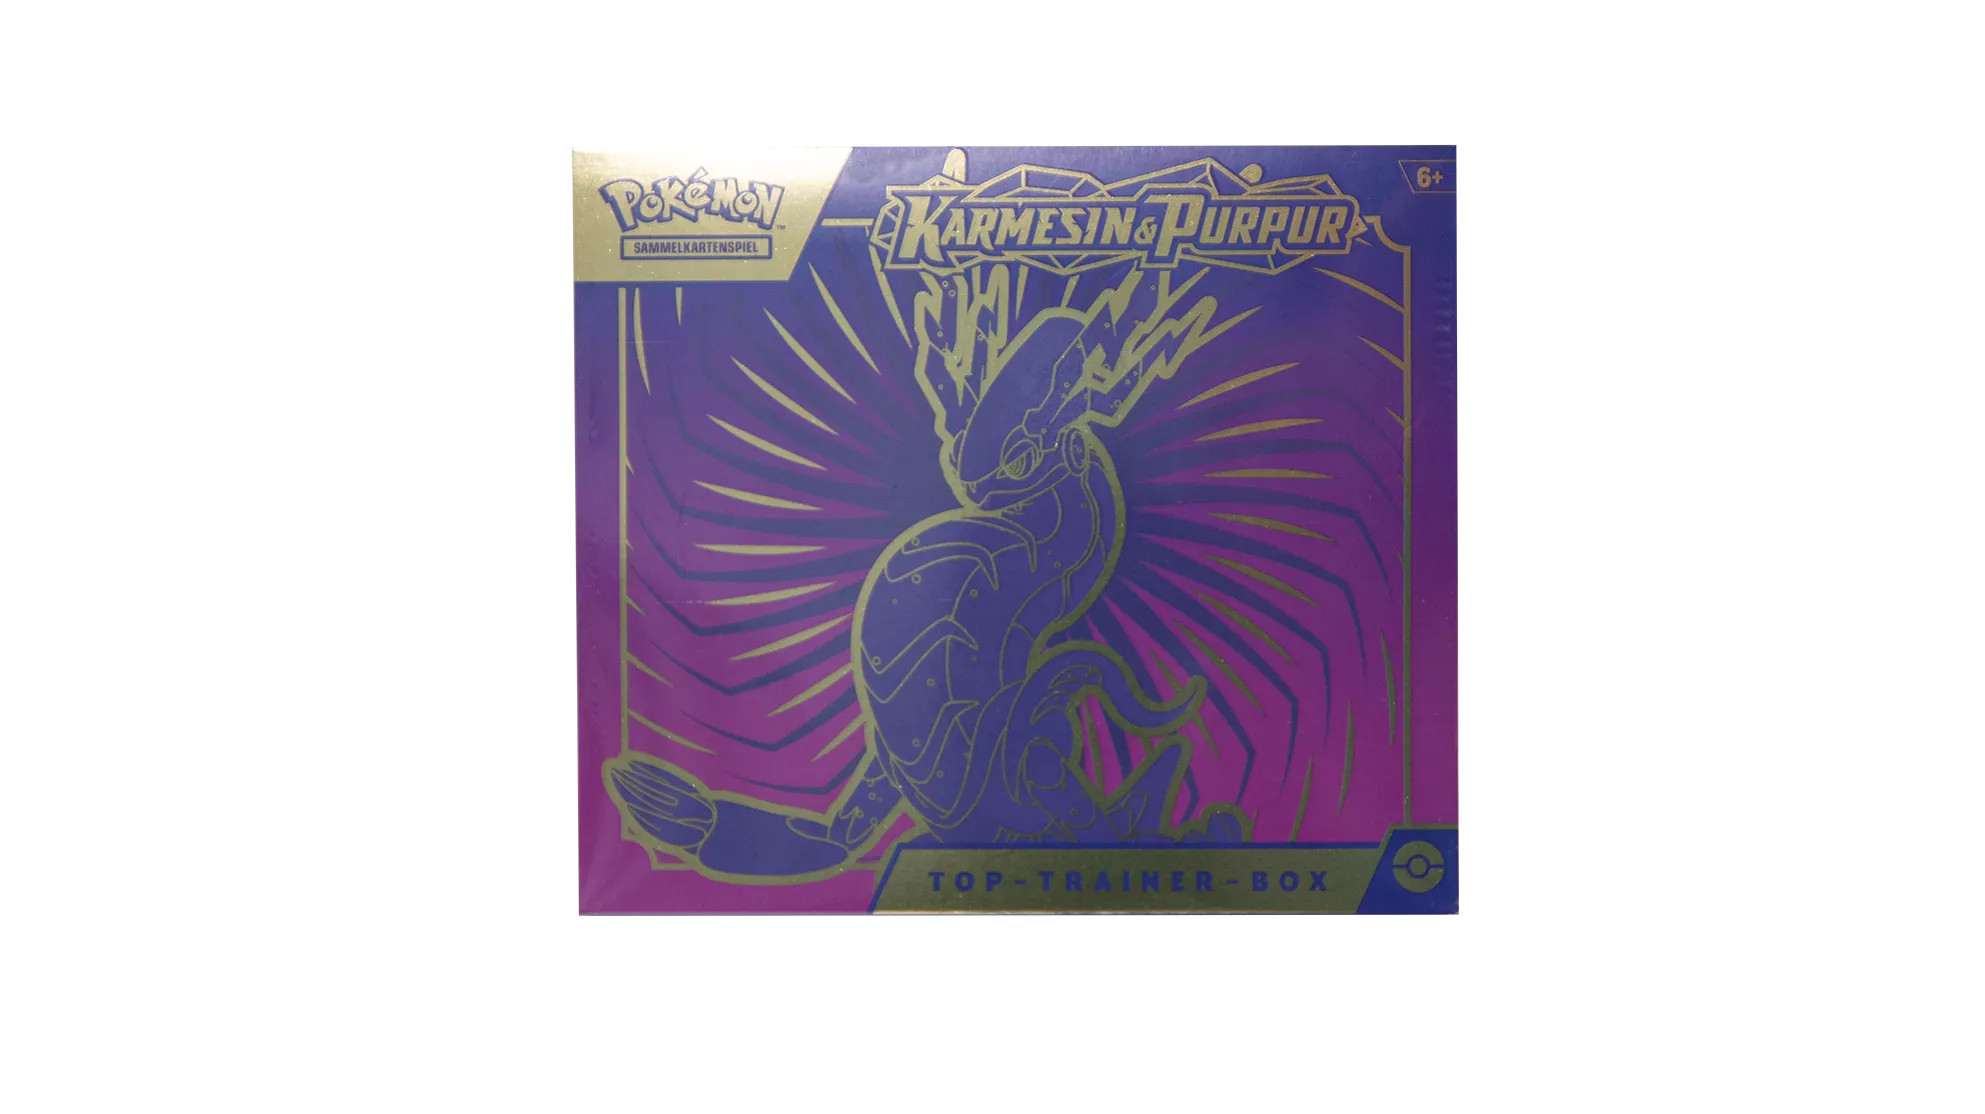 POKEMON 45579 PKM Pokémon Top-Trainer Box Karmesin & Purpur, sortiert